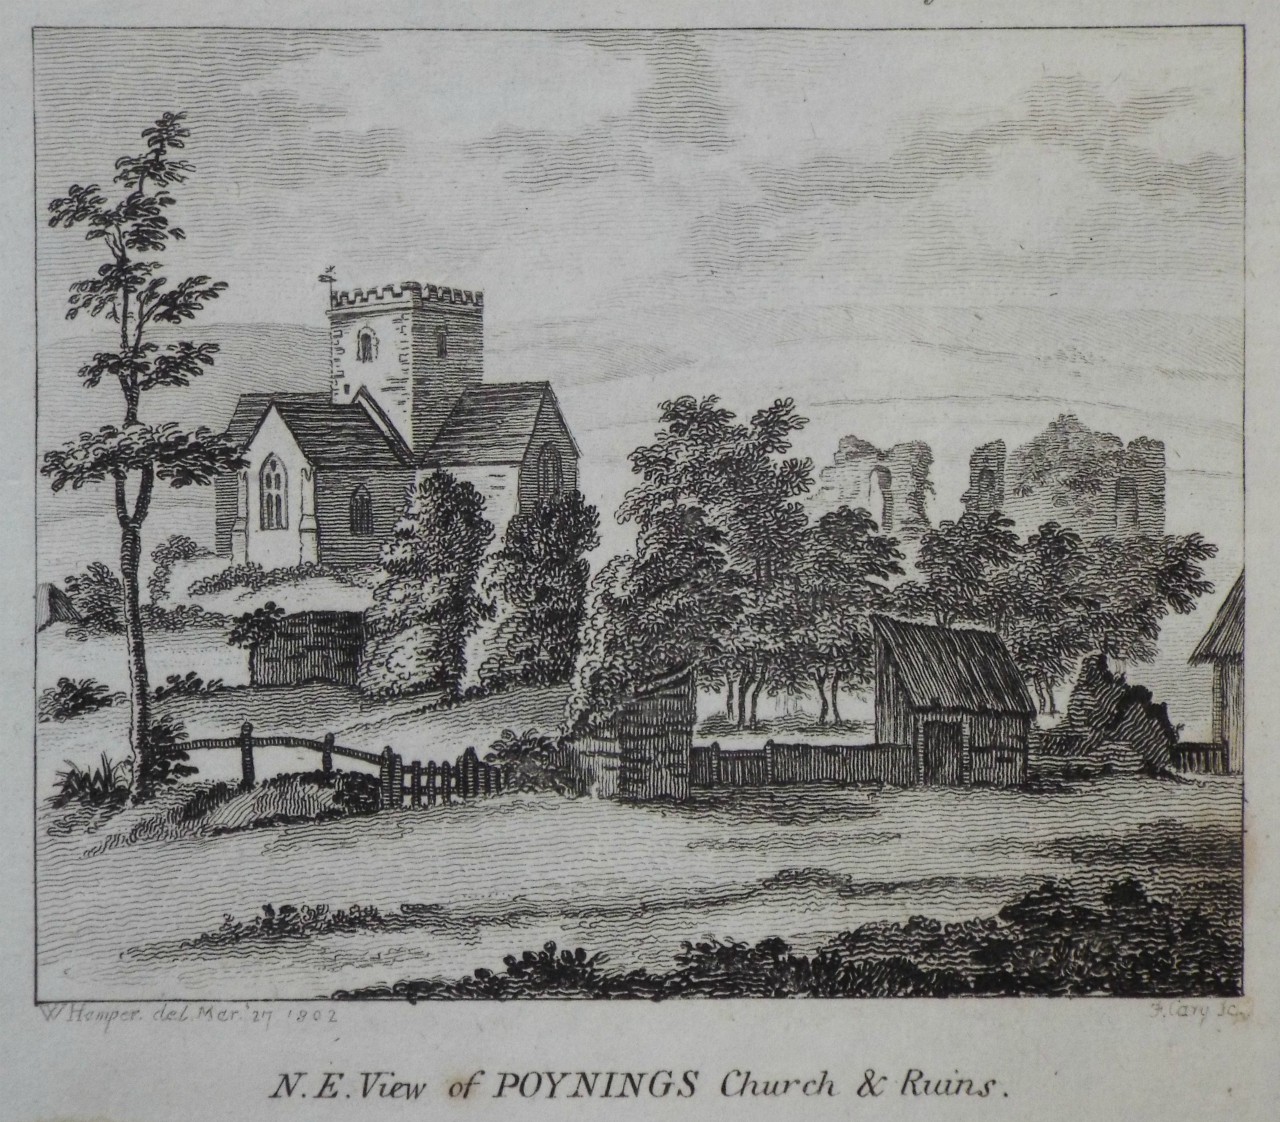 Print - N.E. View of Poynings & Ruins. - Cary